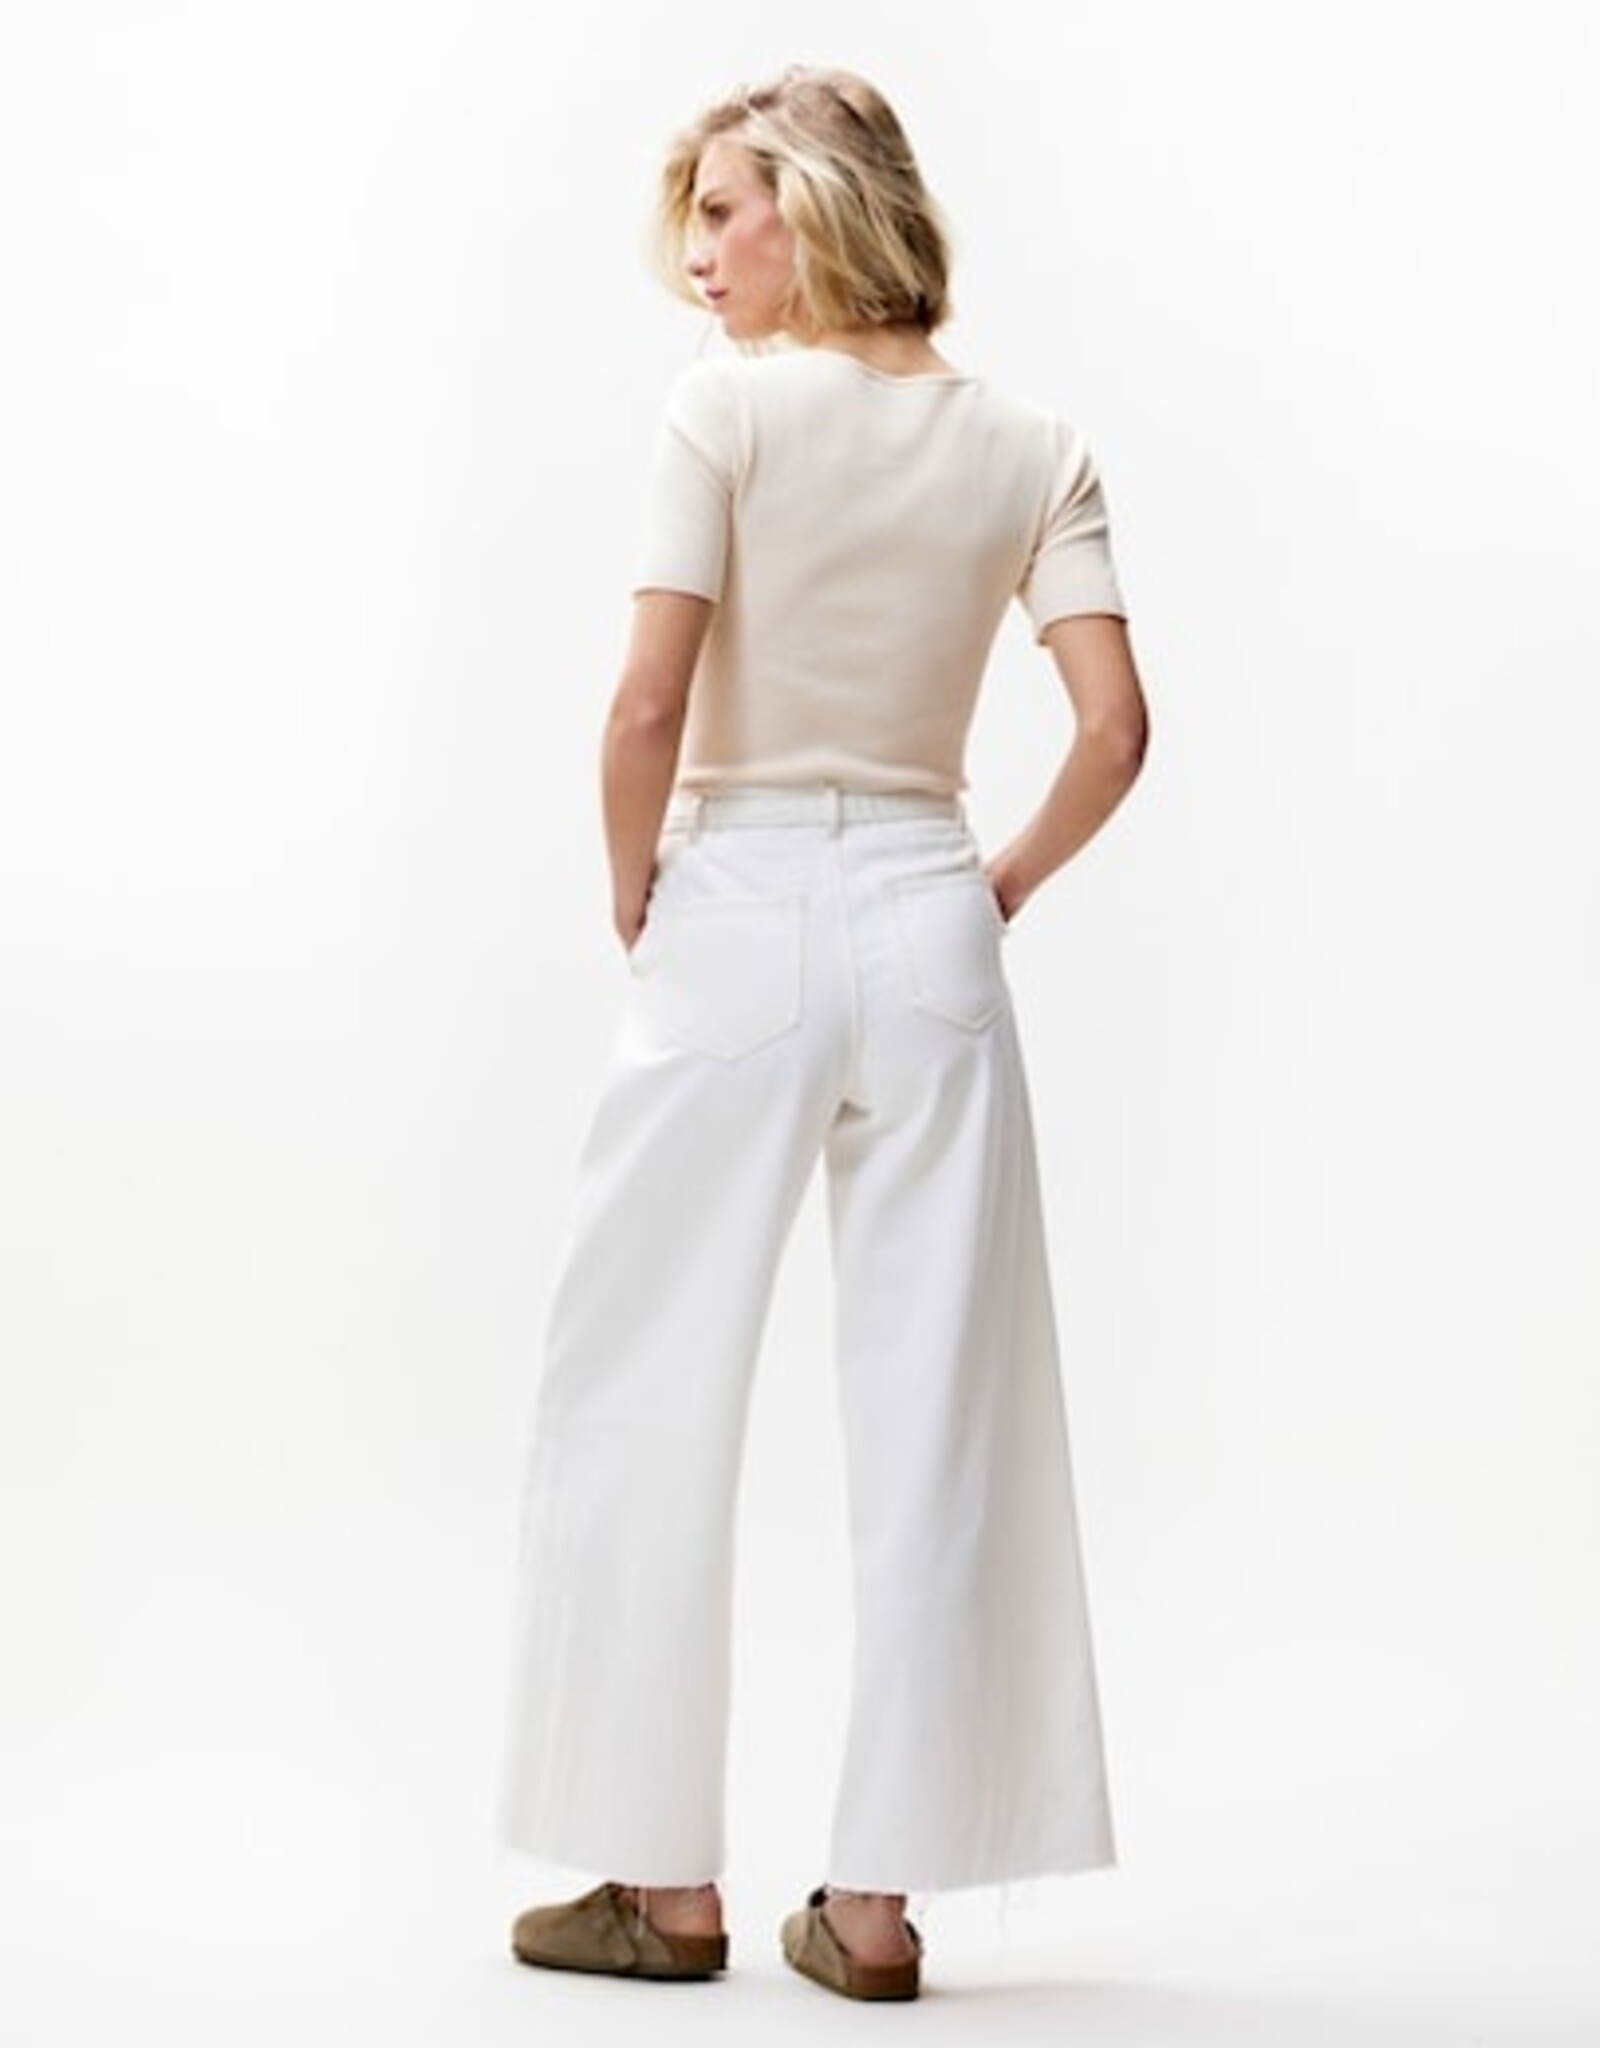 Catwalk Junkie Jeans 'Cropped Straight' - Off White - Catwalk Junkie